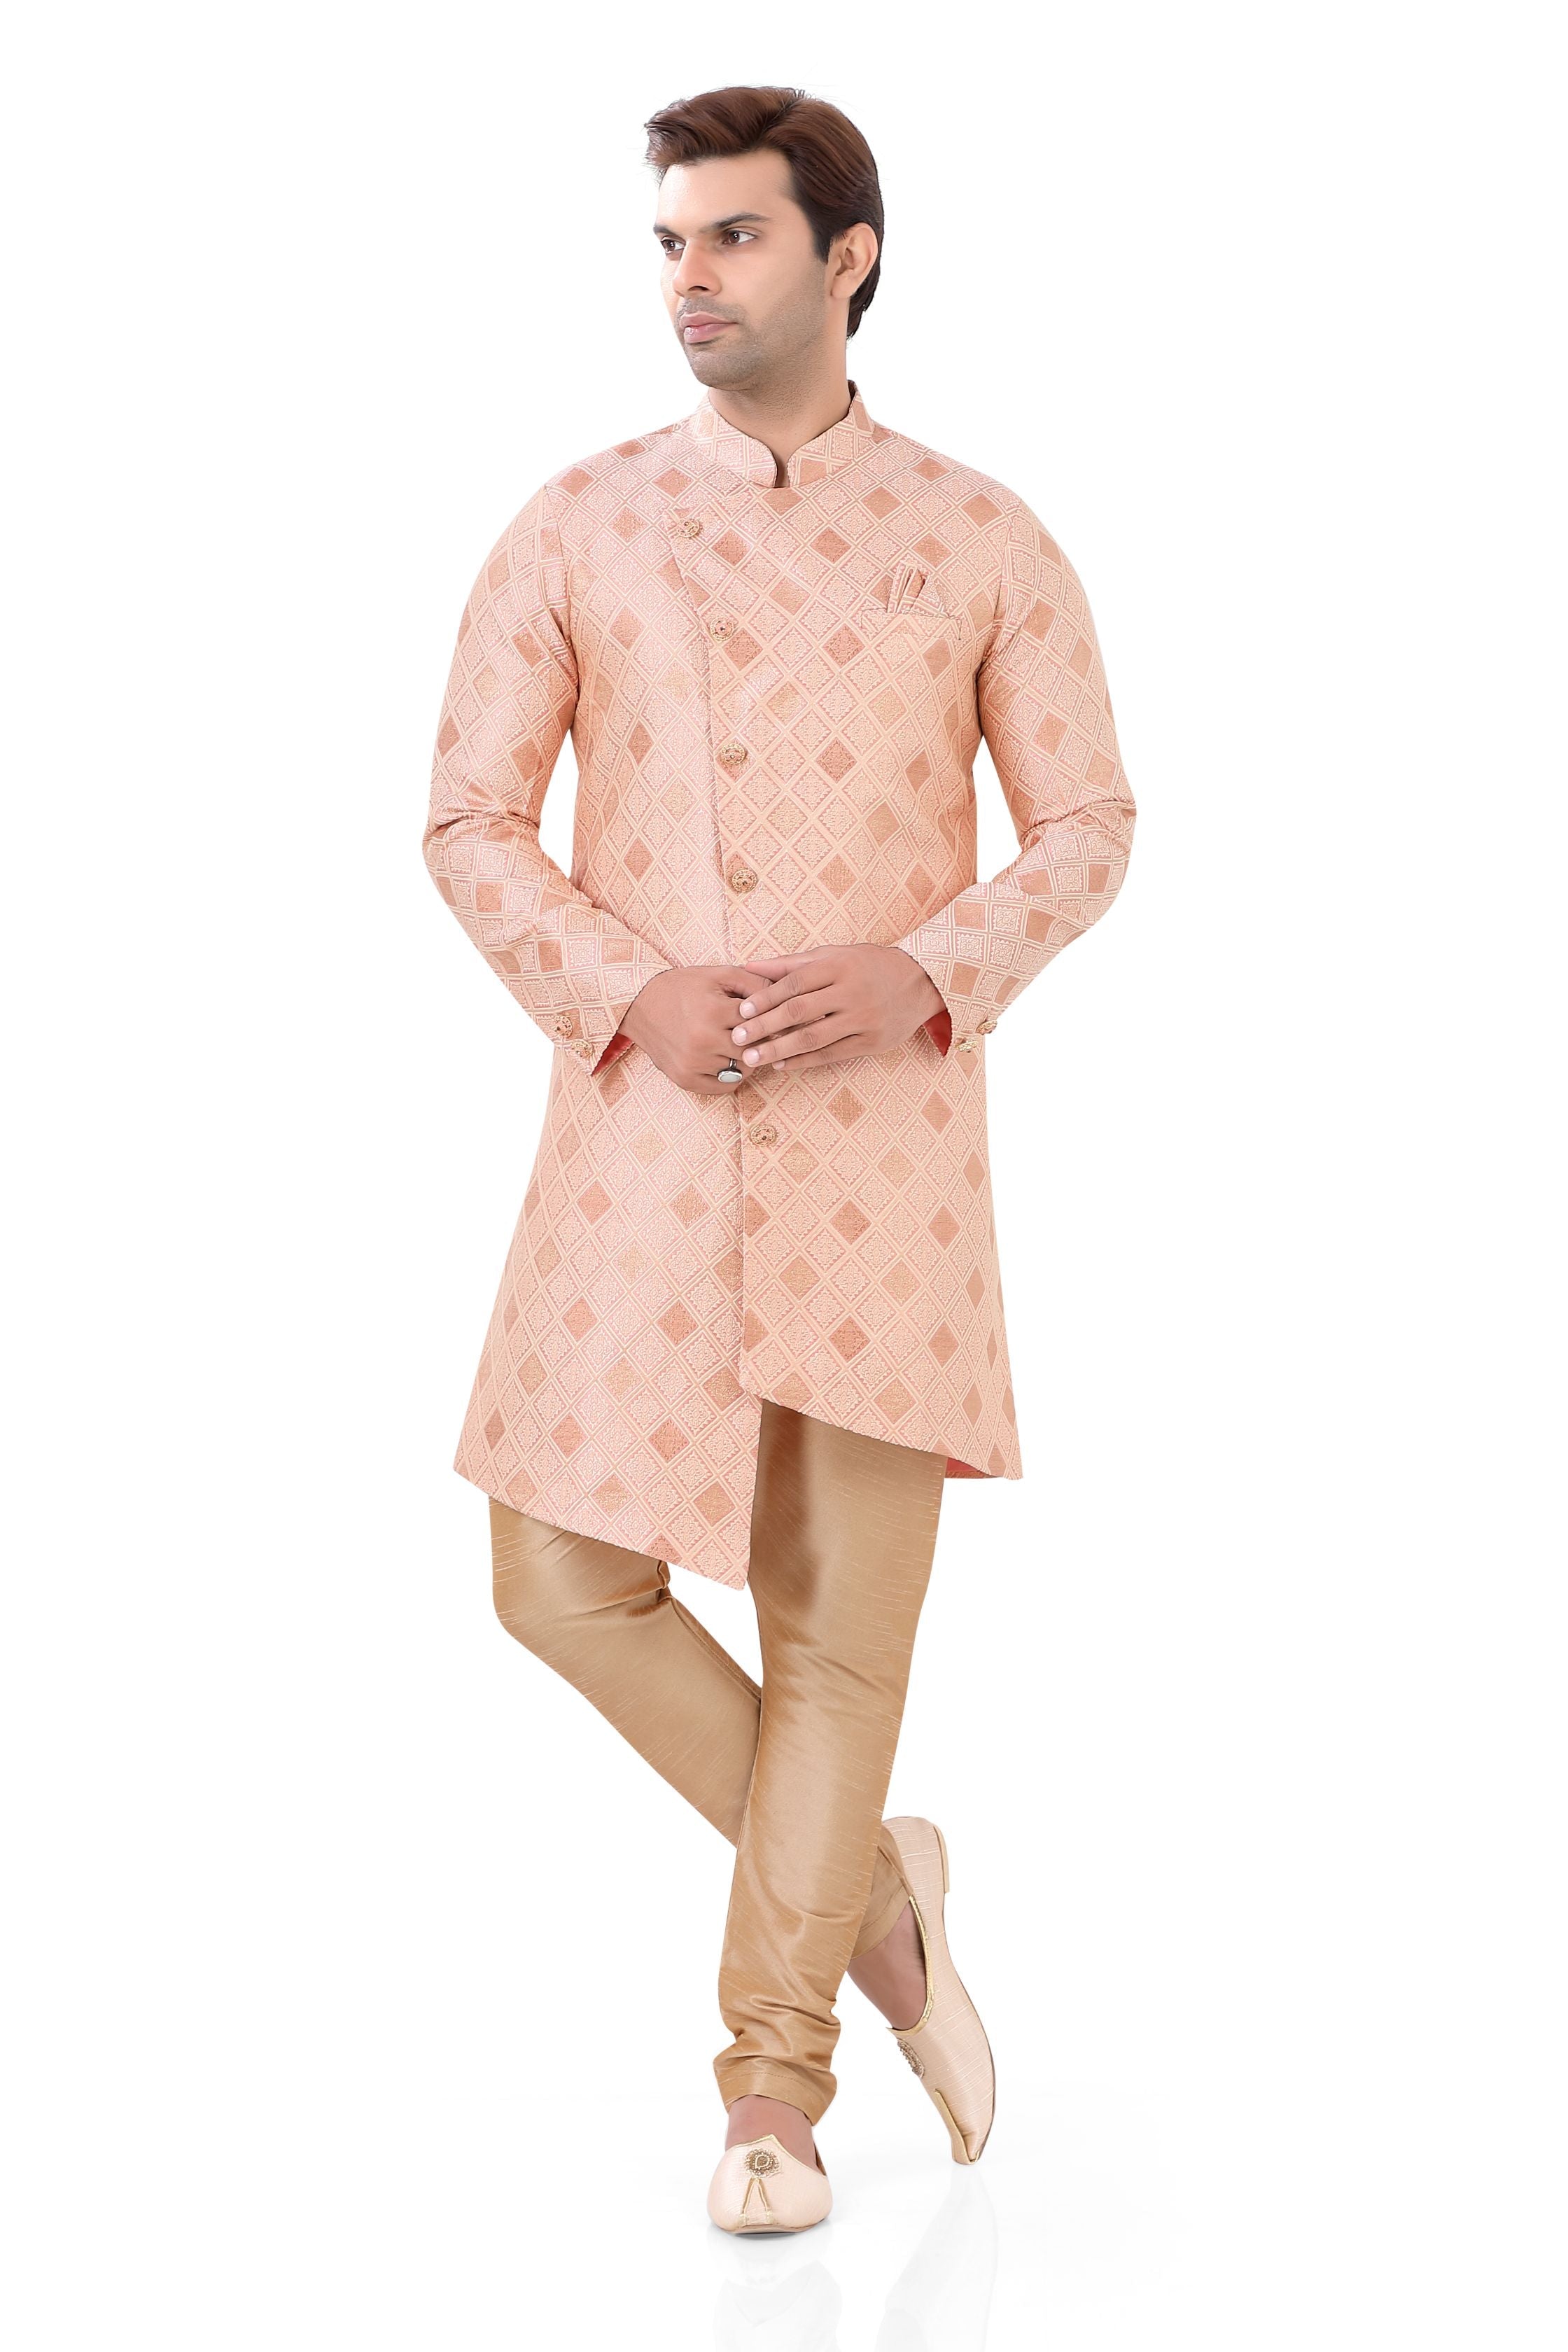 Jamevaram Indo Western in Blush Pink